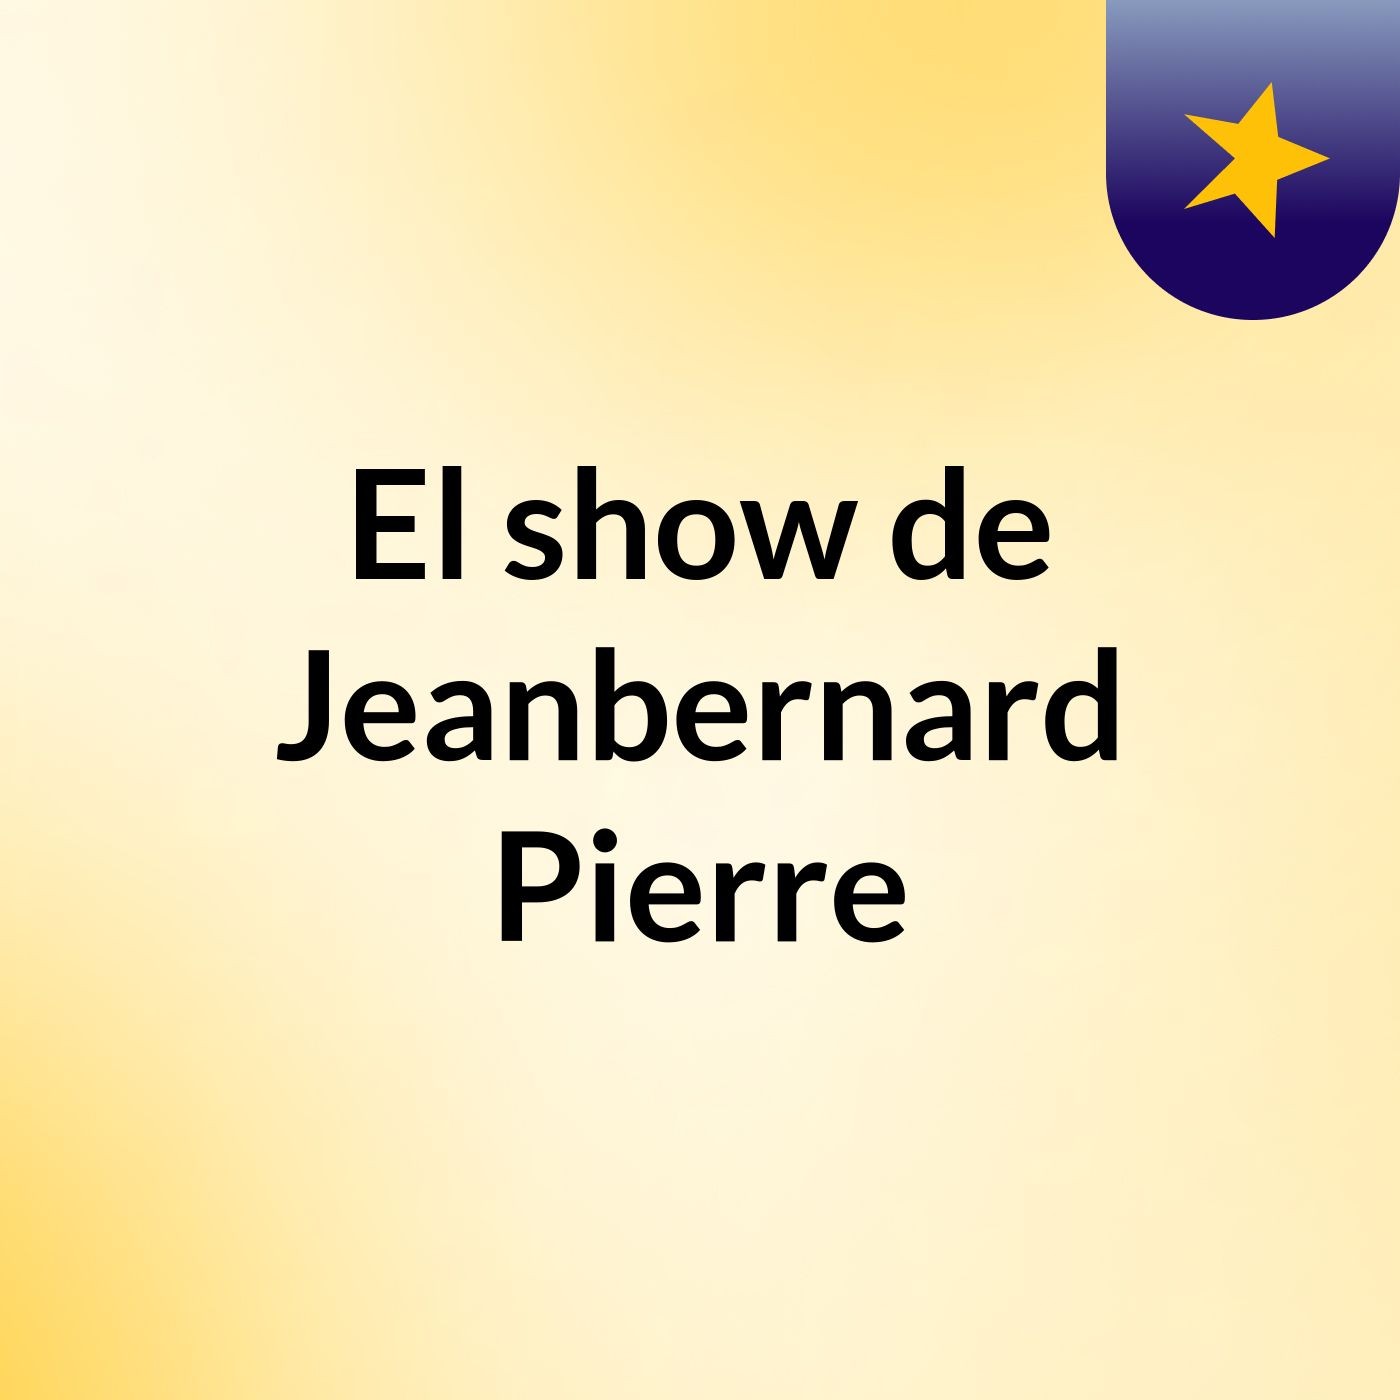 Episodio 3 - El show de Jeanbernard Pierre